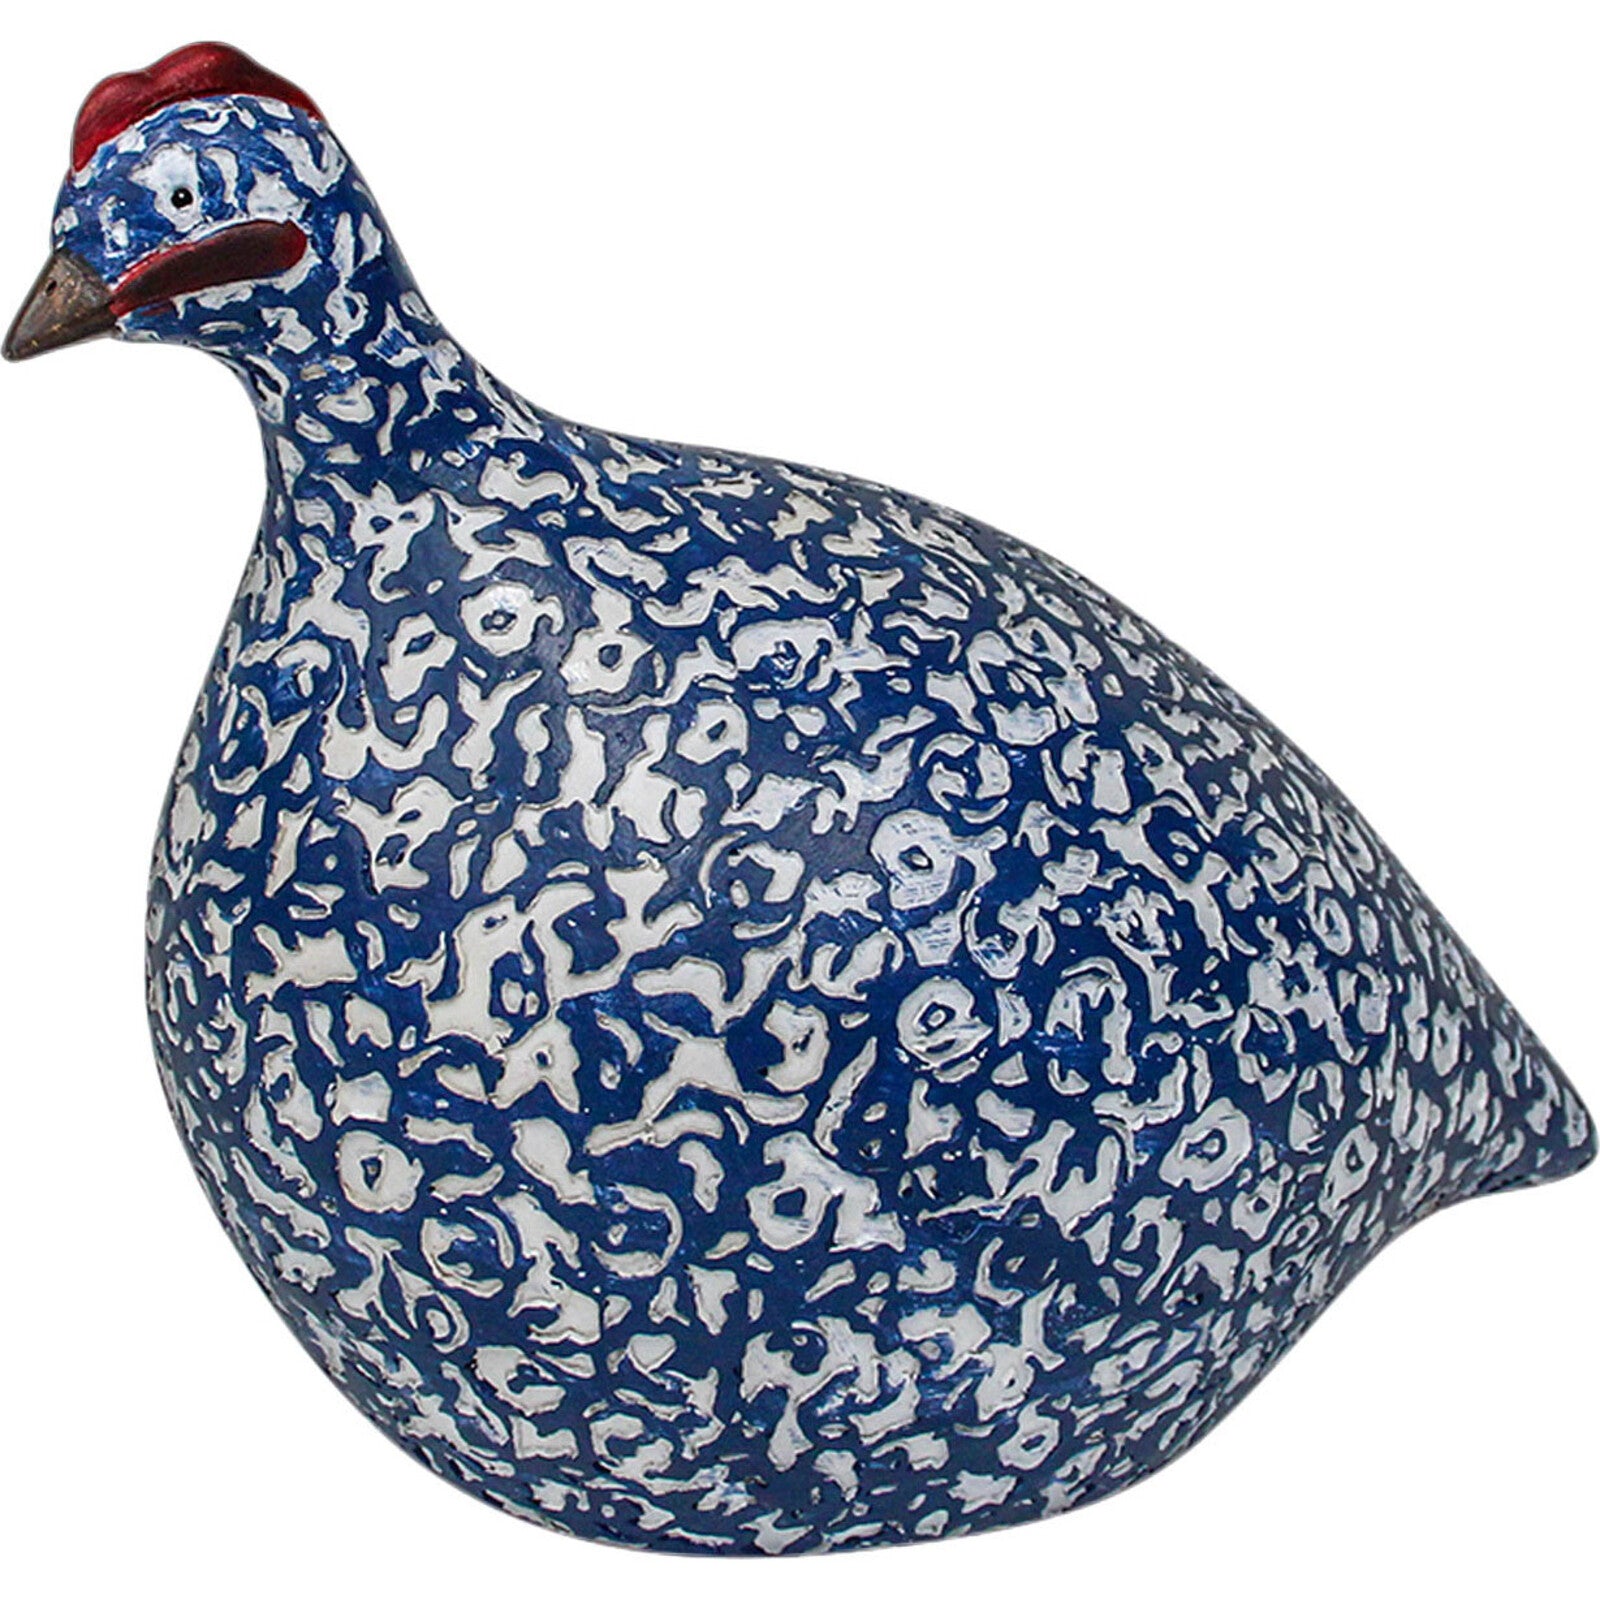 blue and white guinea fowl ornament